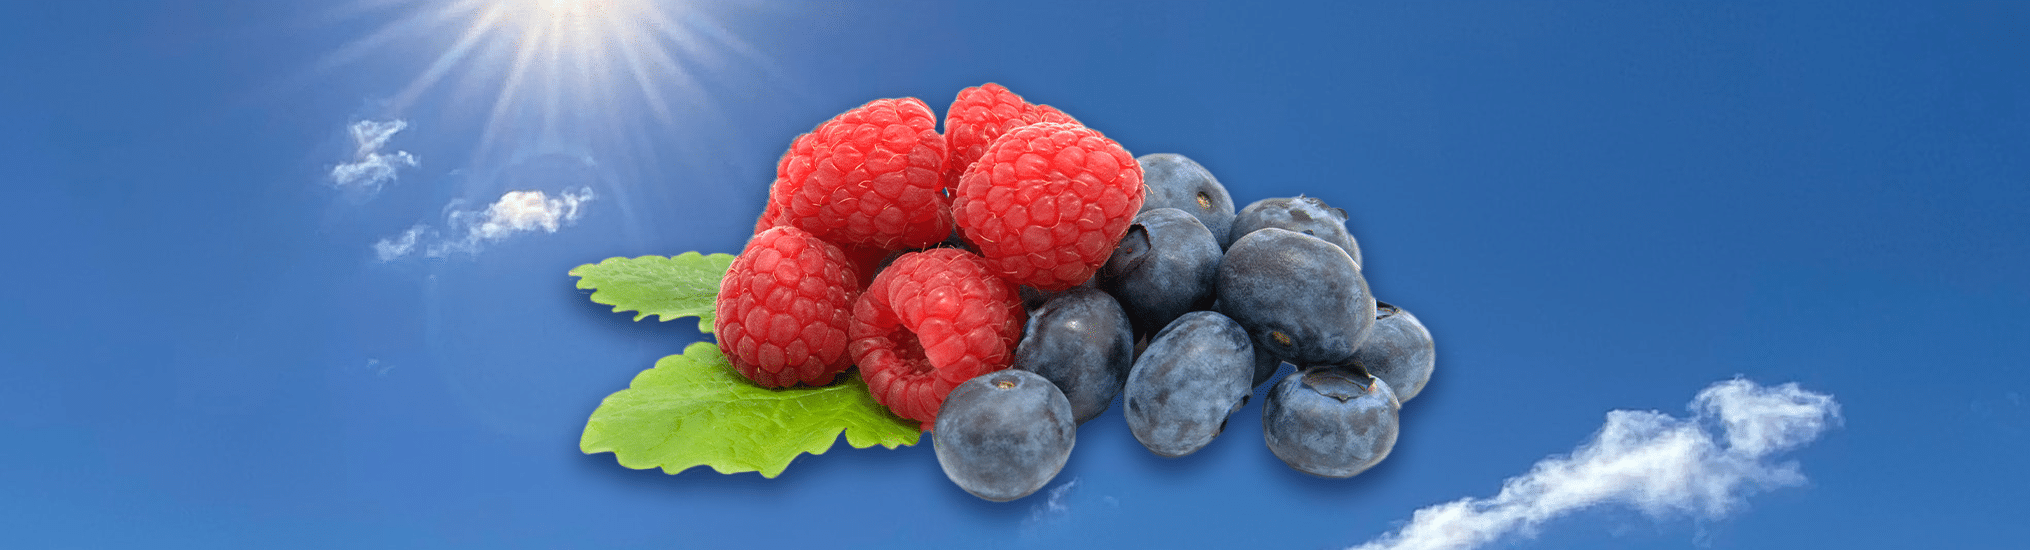 Blueberry Raspberry Chopped Kit Berries